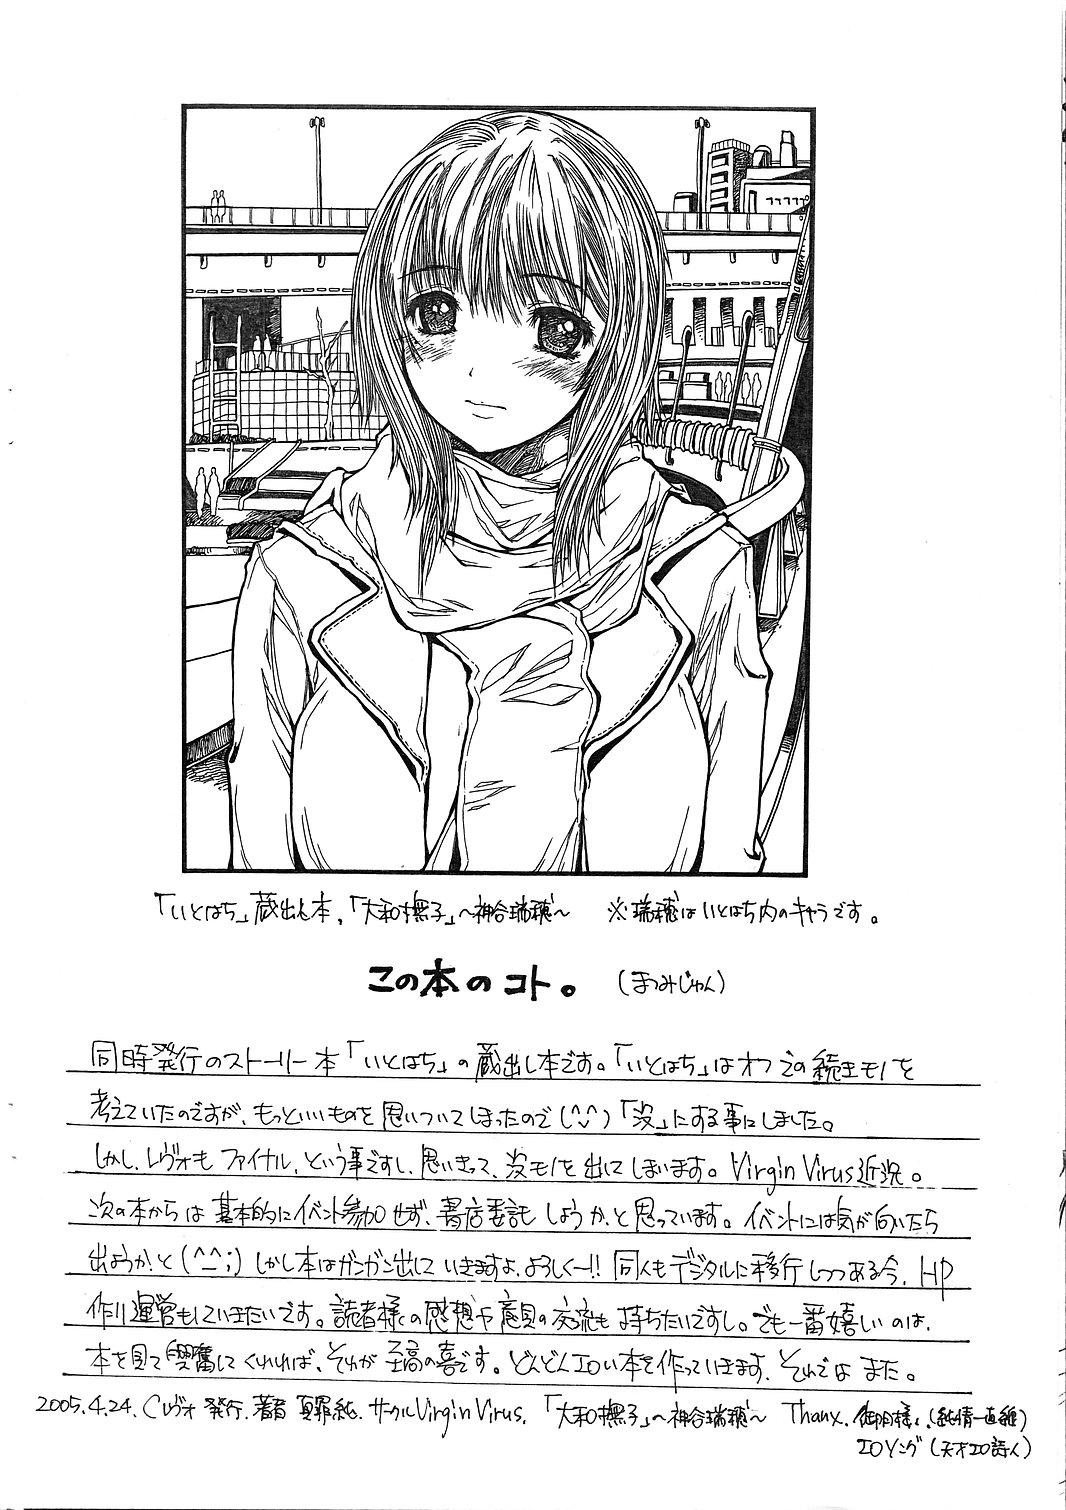 Playing Yamato Nadeshiko wo Omoikkiri Kegashitai! Picked Up - Page 2